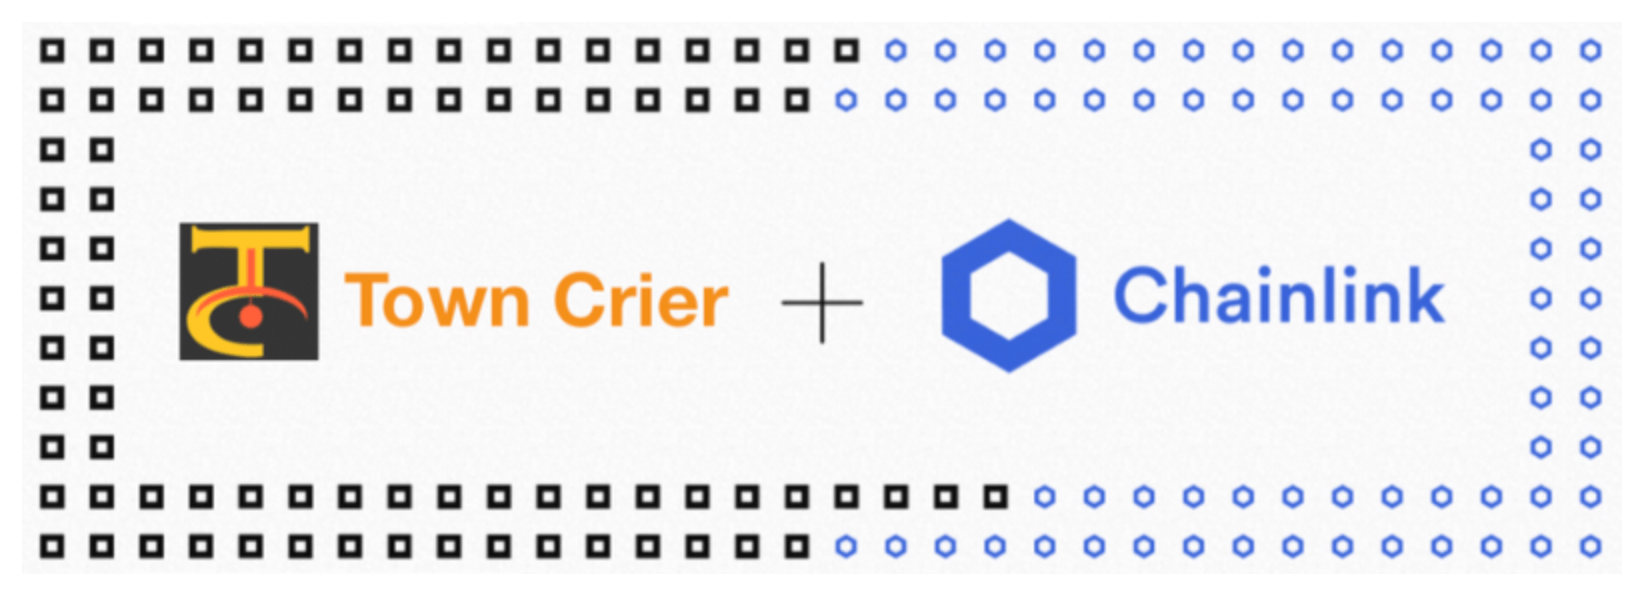 Town Crier是用TEE开发区块链中间件的领先企业，这家公司在2018年被Chainlink收购。